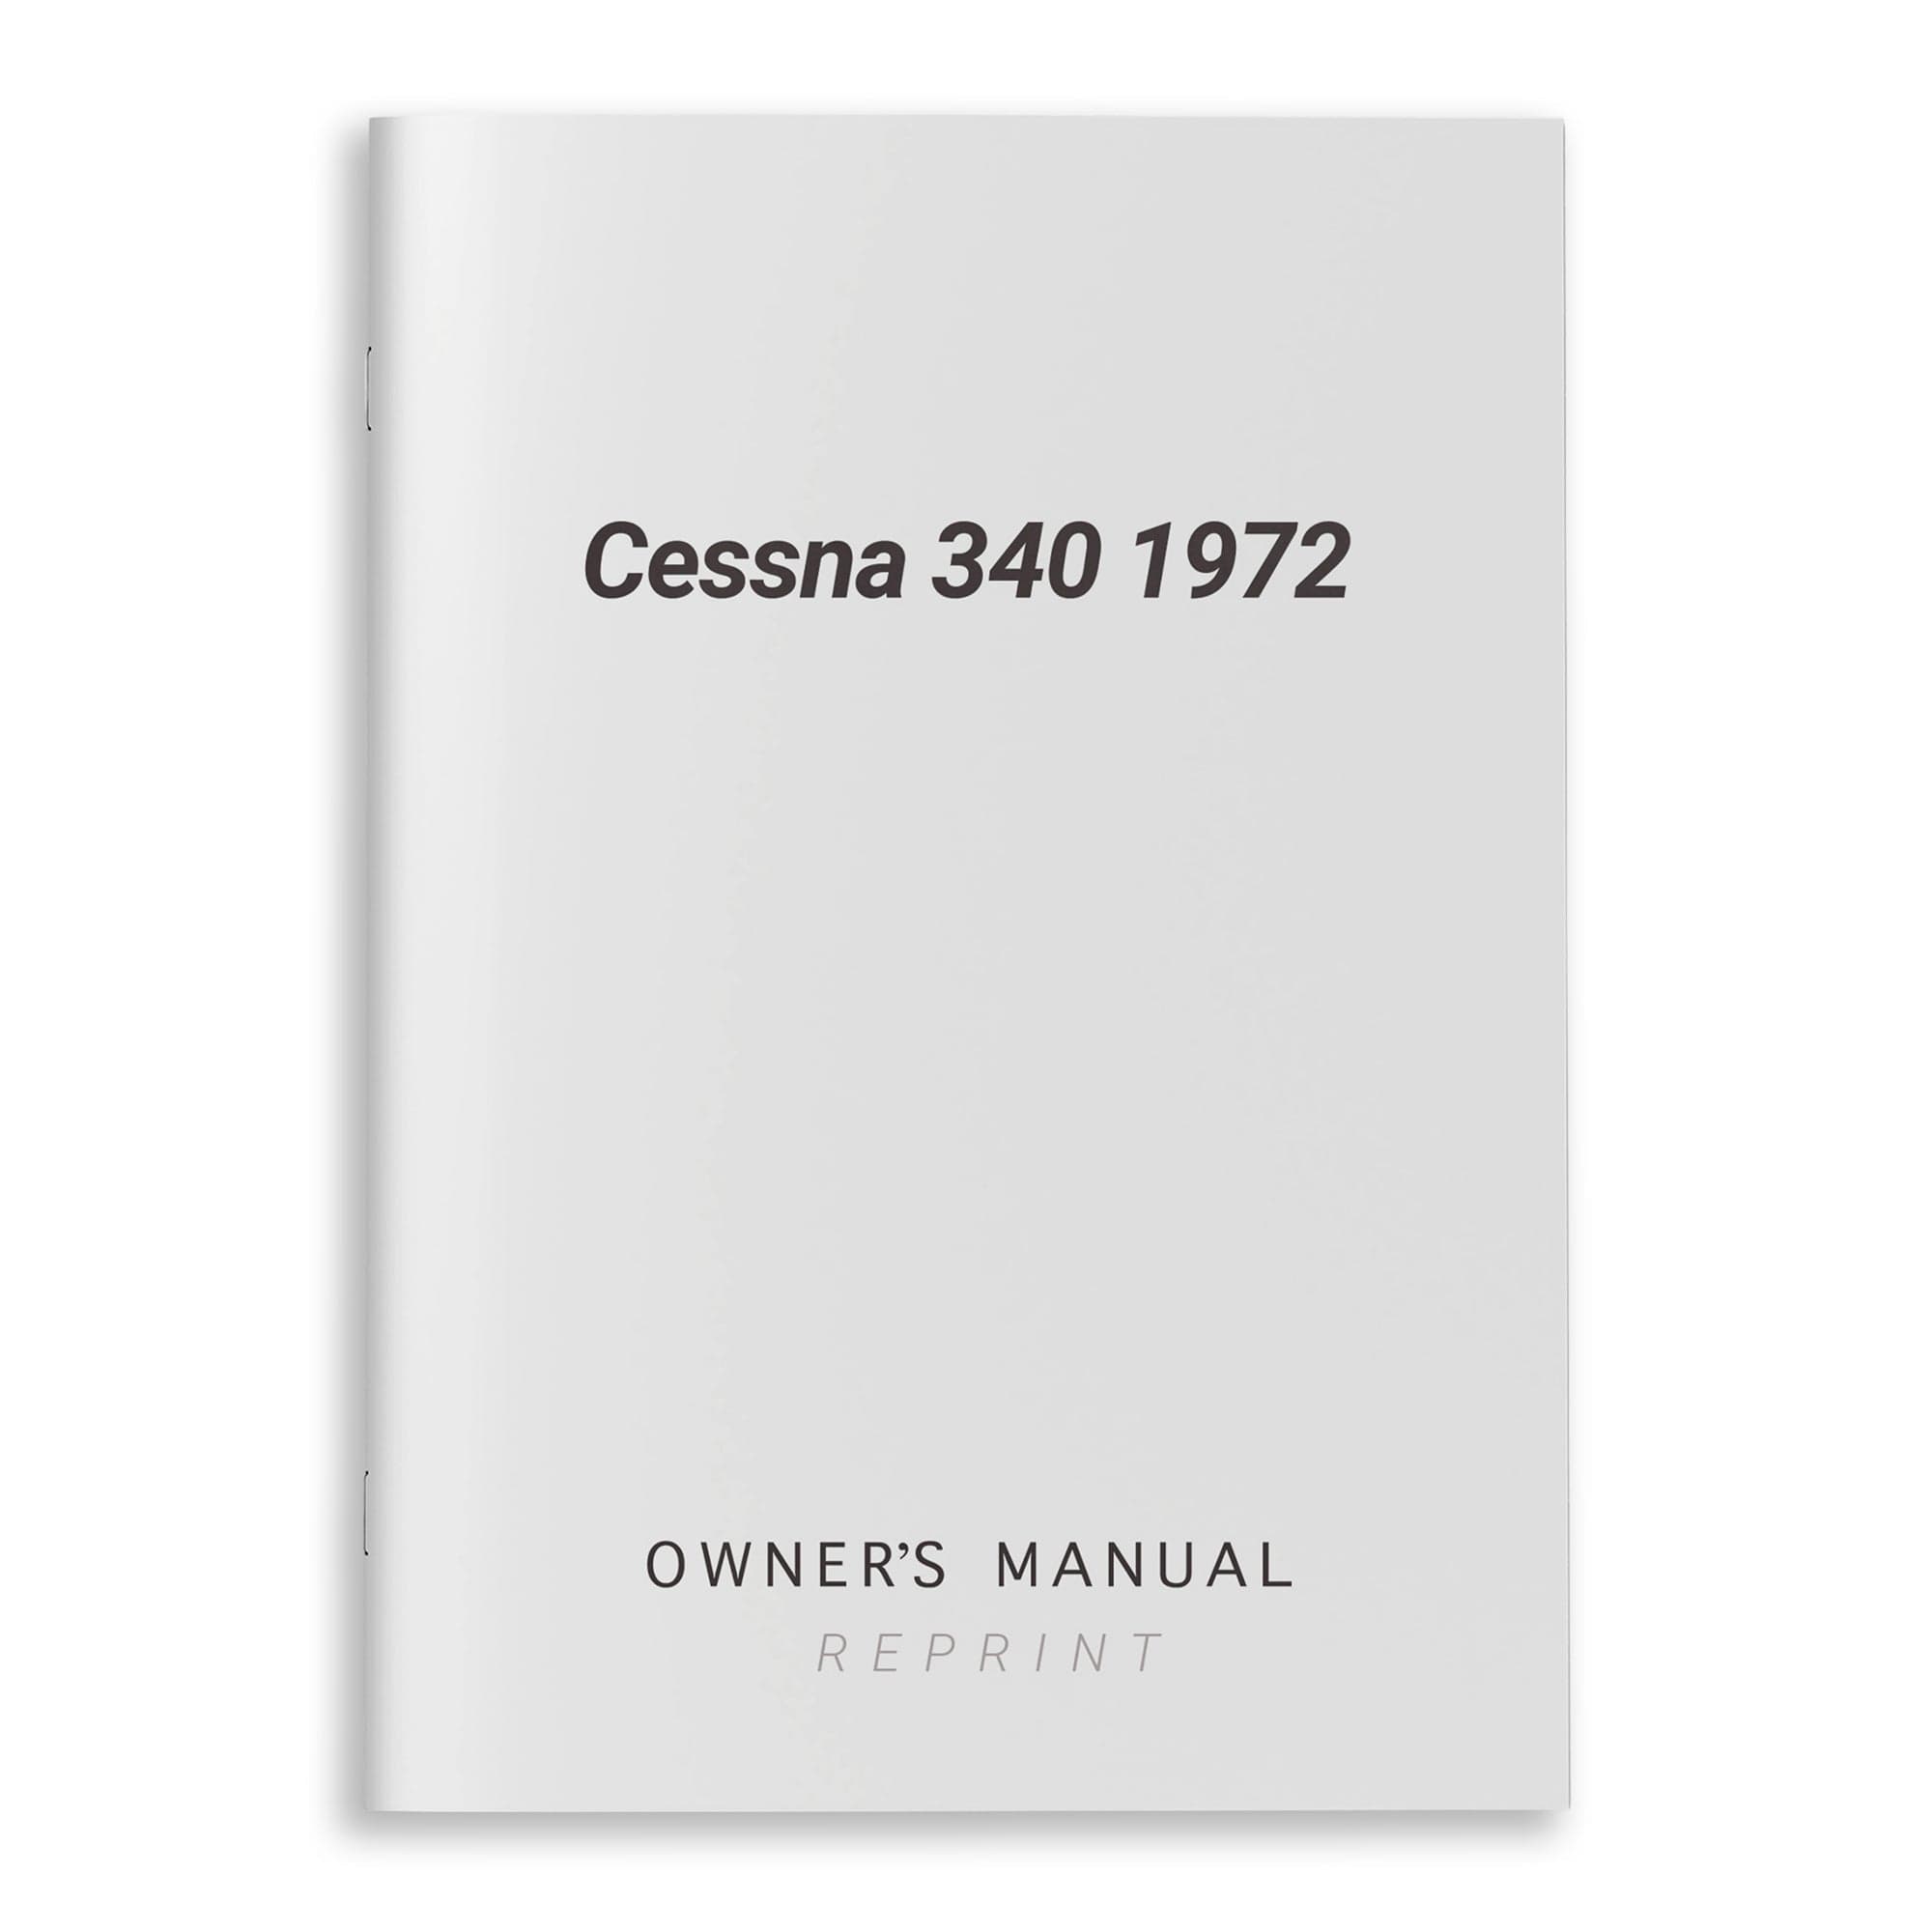 Cessna 340 1972 Owner's Manual